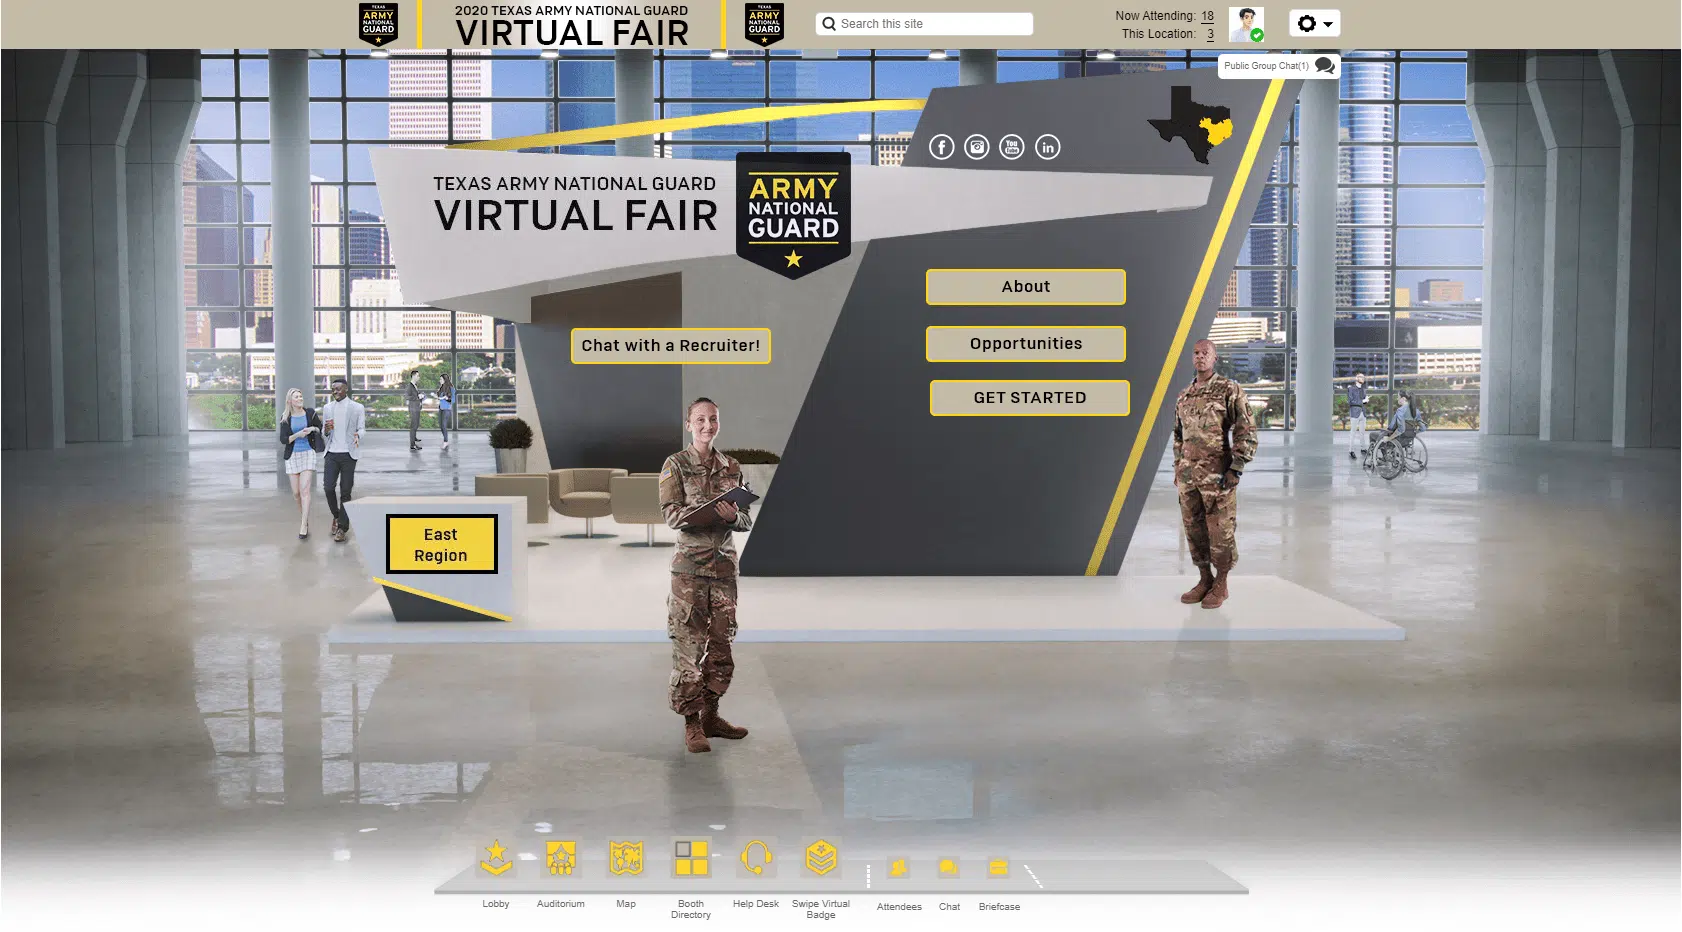 Virtual Career Fair booth job